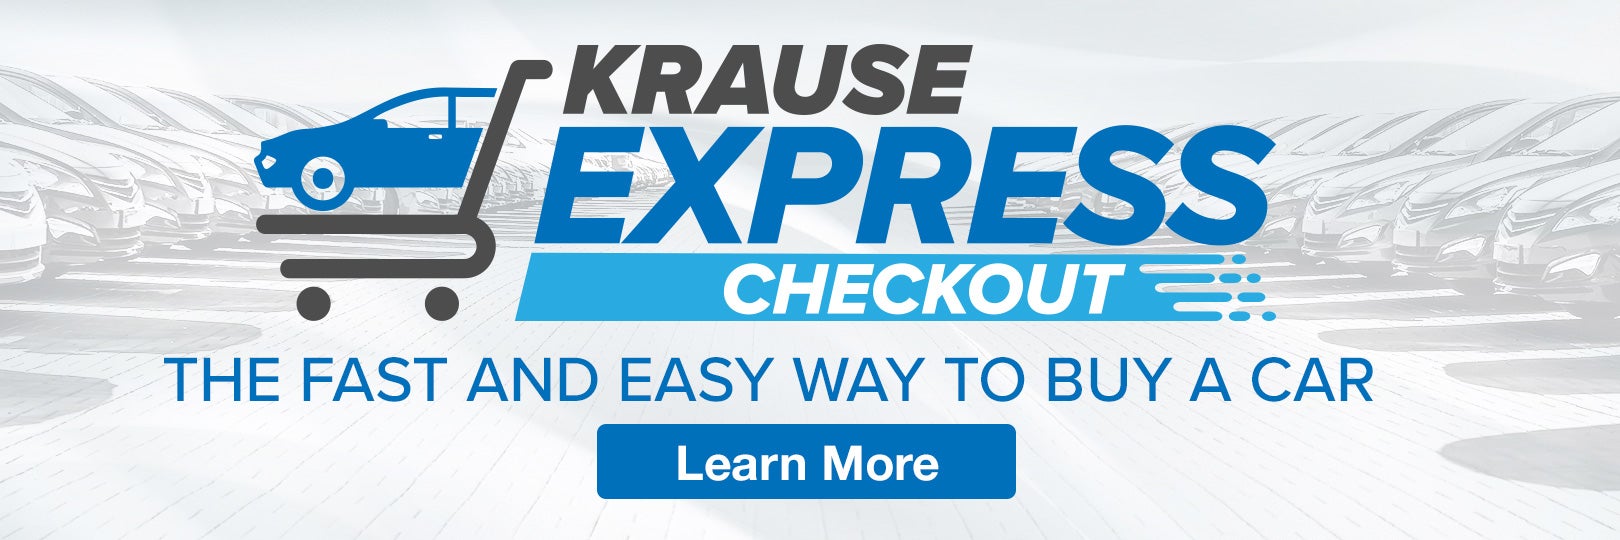 Krause Express in Alpharetta GA